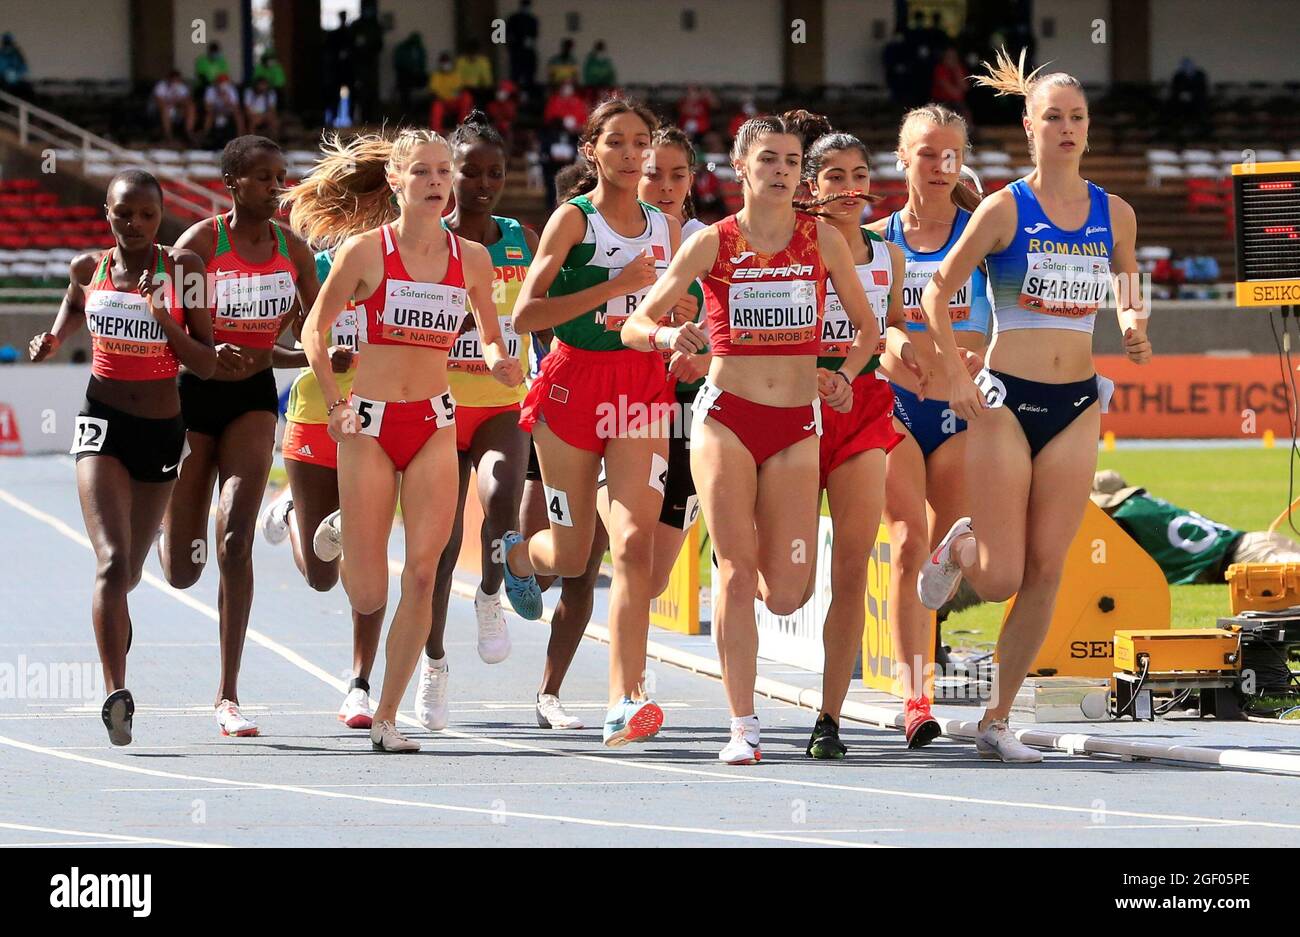 Athletics - 2021 World Athletics U20 Championships - Athletes compete in the Women's 1500m Final - Kasarani Stadium, Nairobi, Kenya - August 22, 2021. REUTERS/Thomas Mukoya Stock Photo